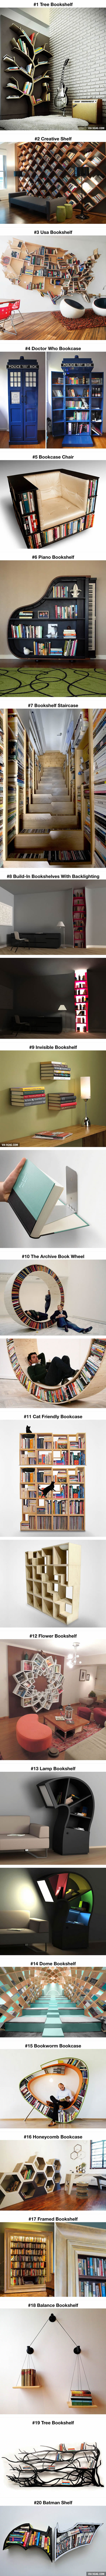 20 Most Creative Bookshelves Ever